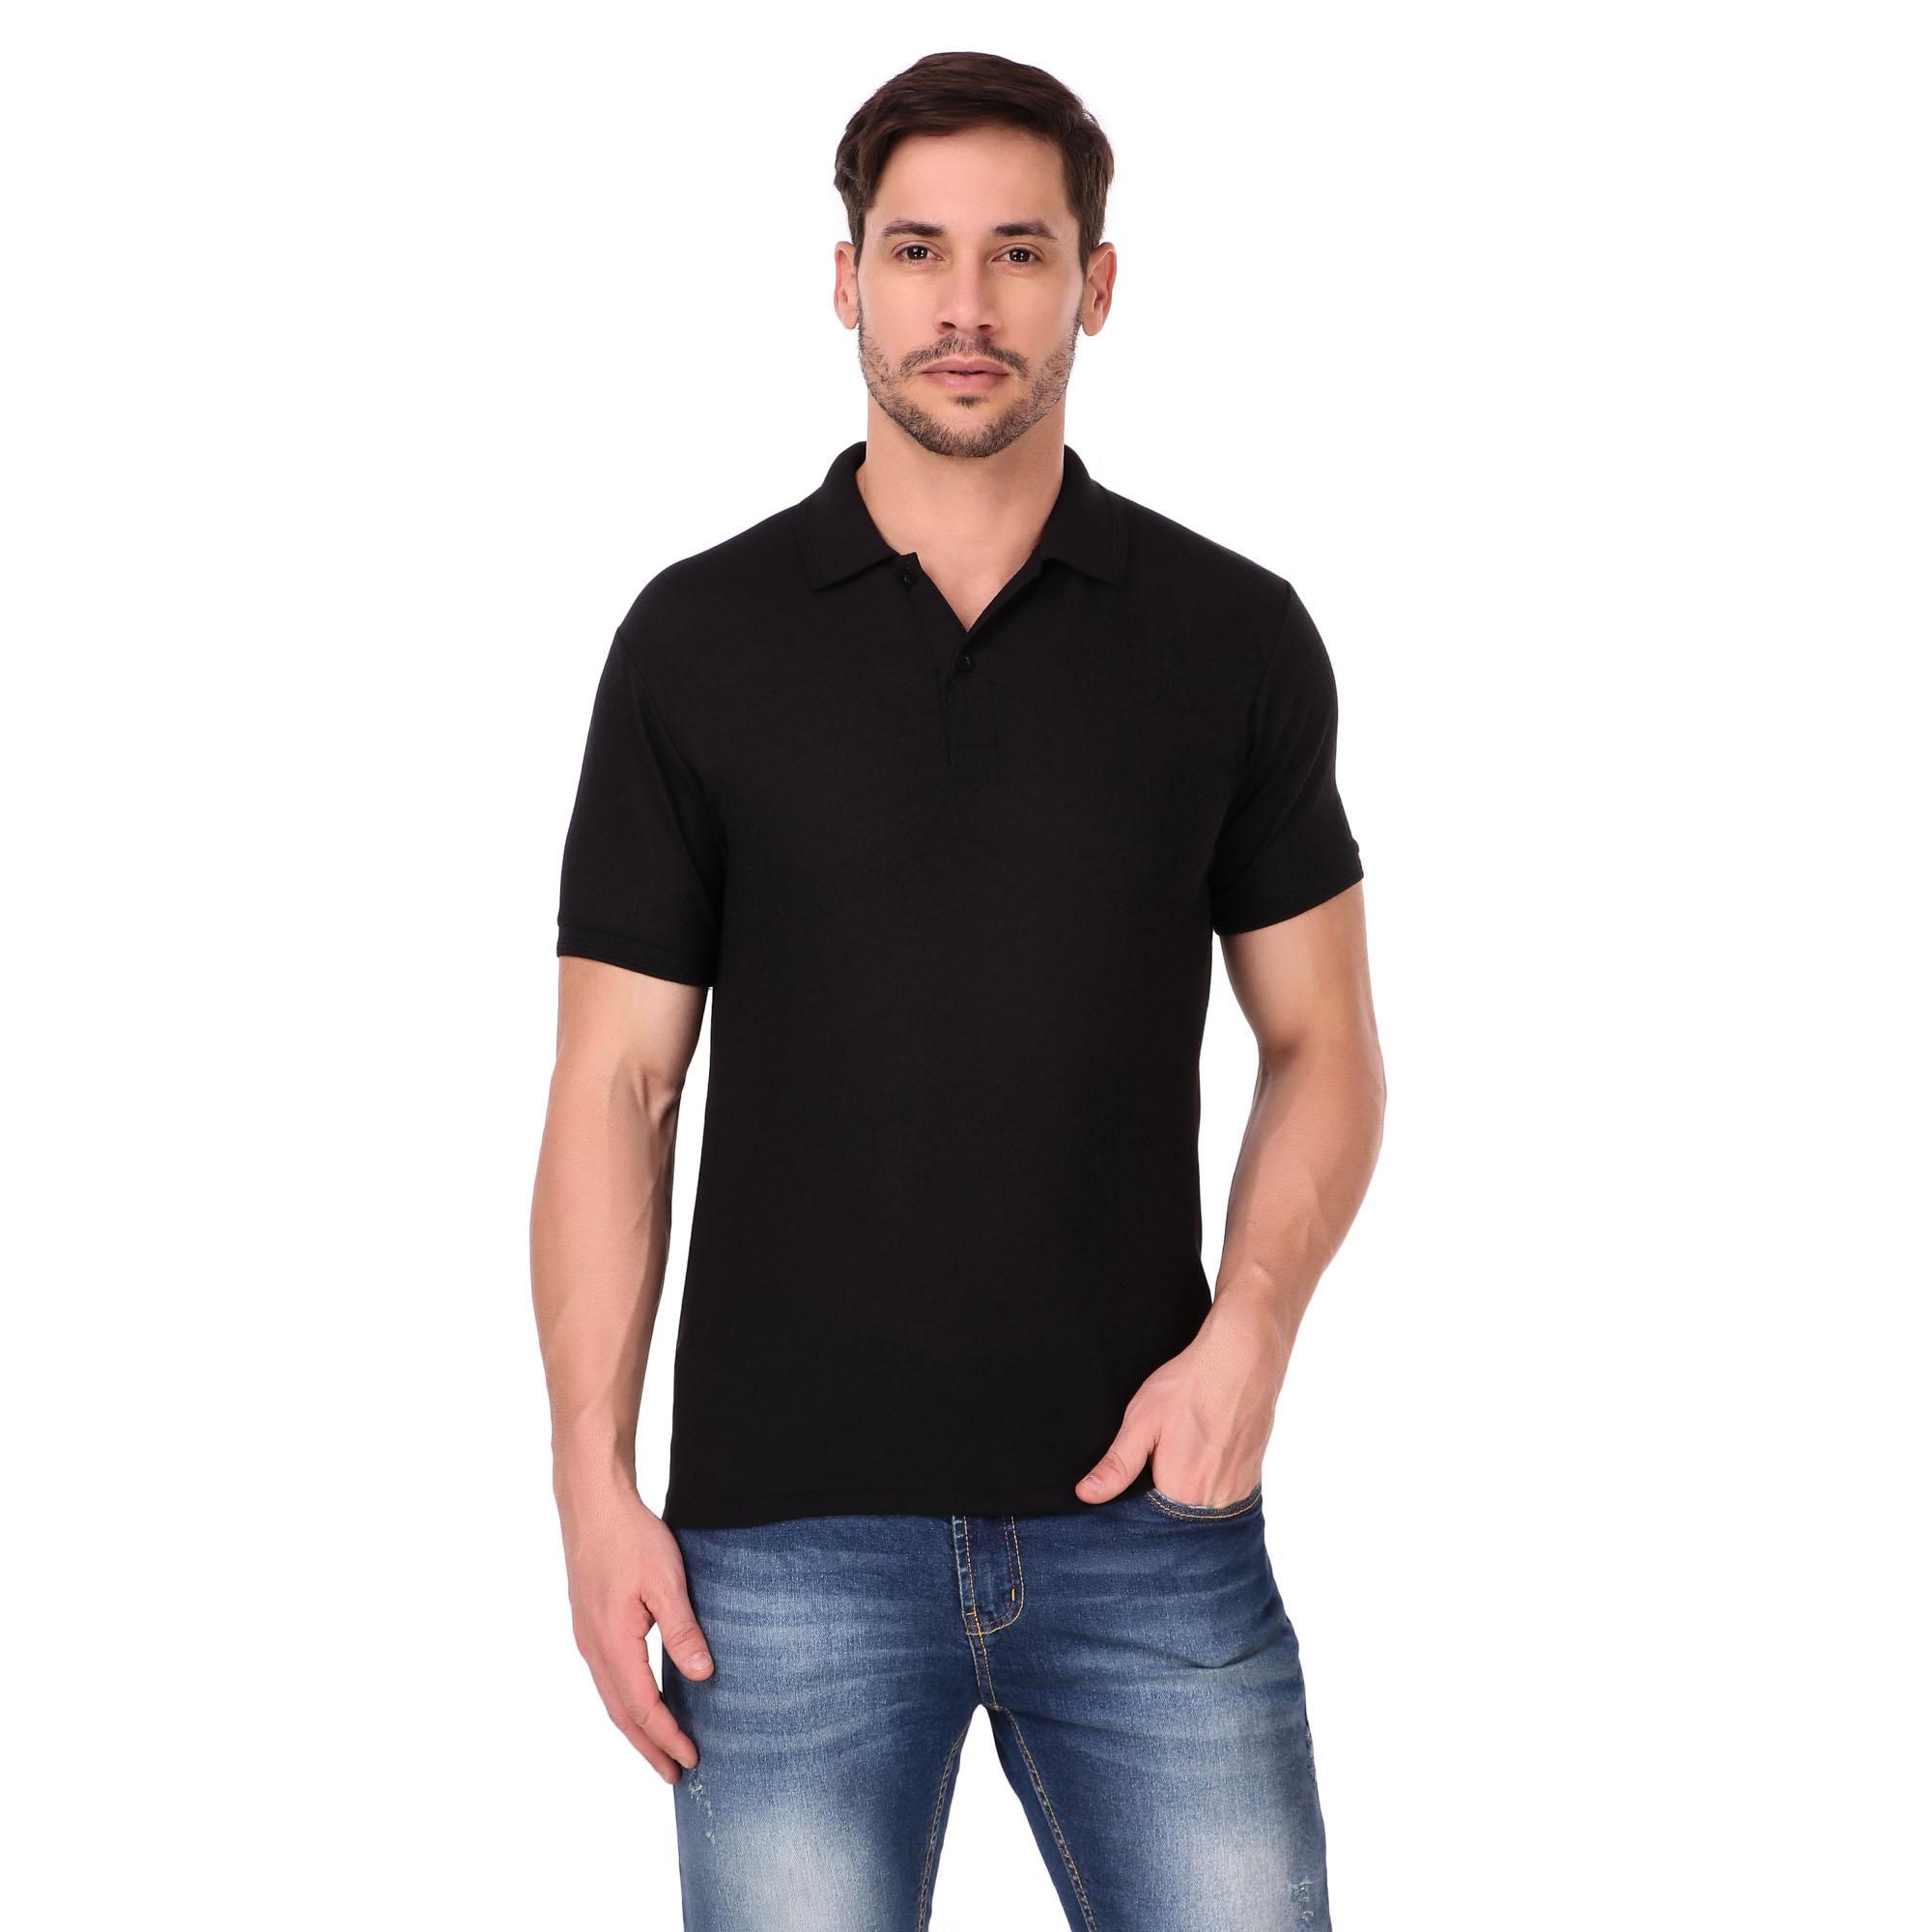 Collar T-Shirt Black